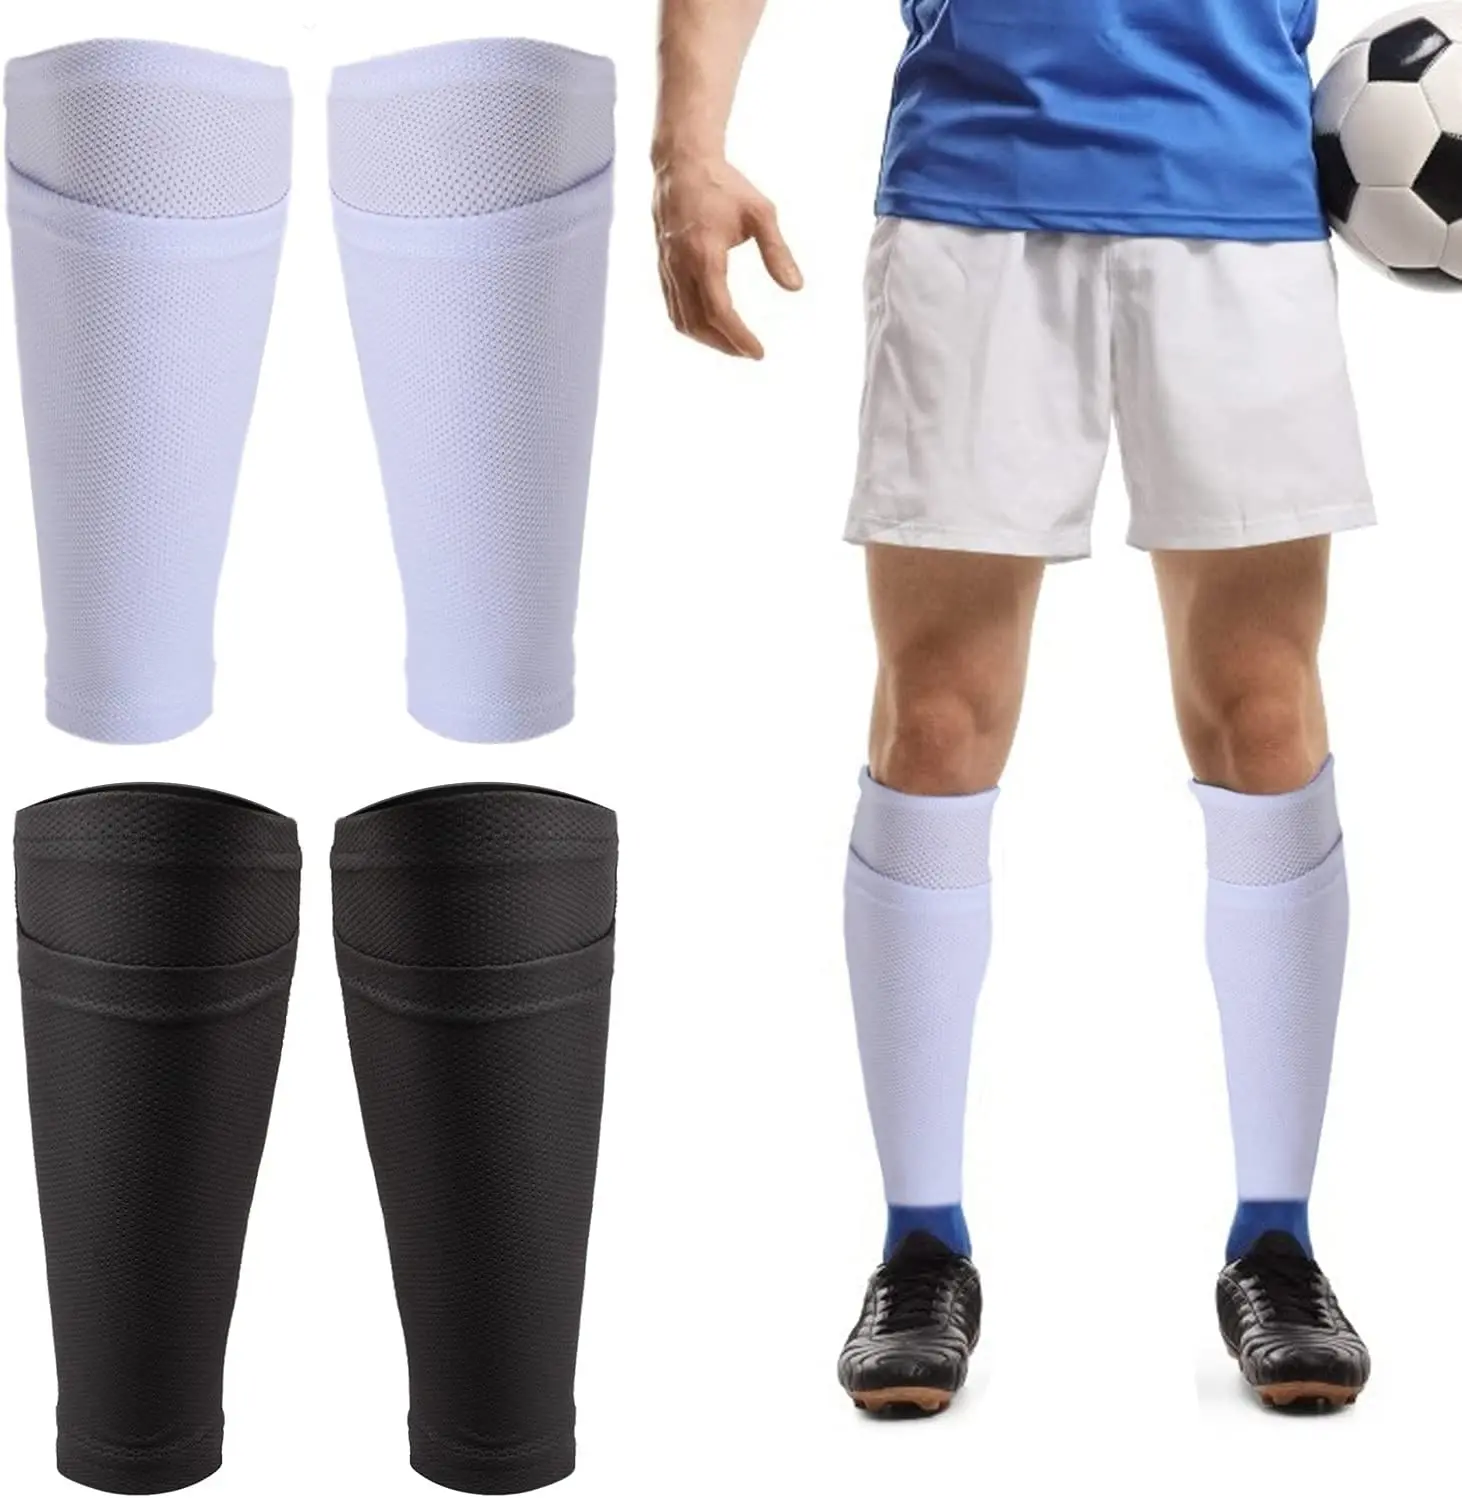 

HYL-1038 sports socks calf protector football shin guard sleeves with pocket, Gray,yellow,white, green, black,blue,orange